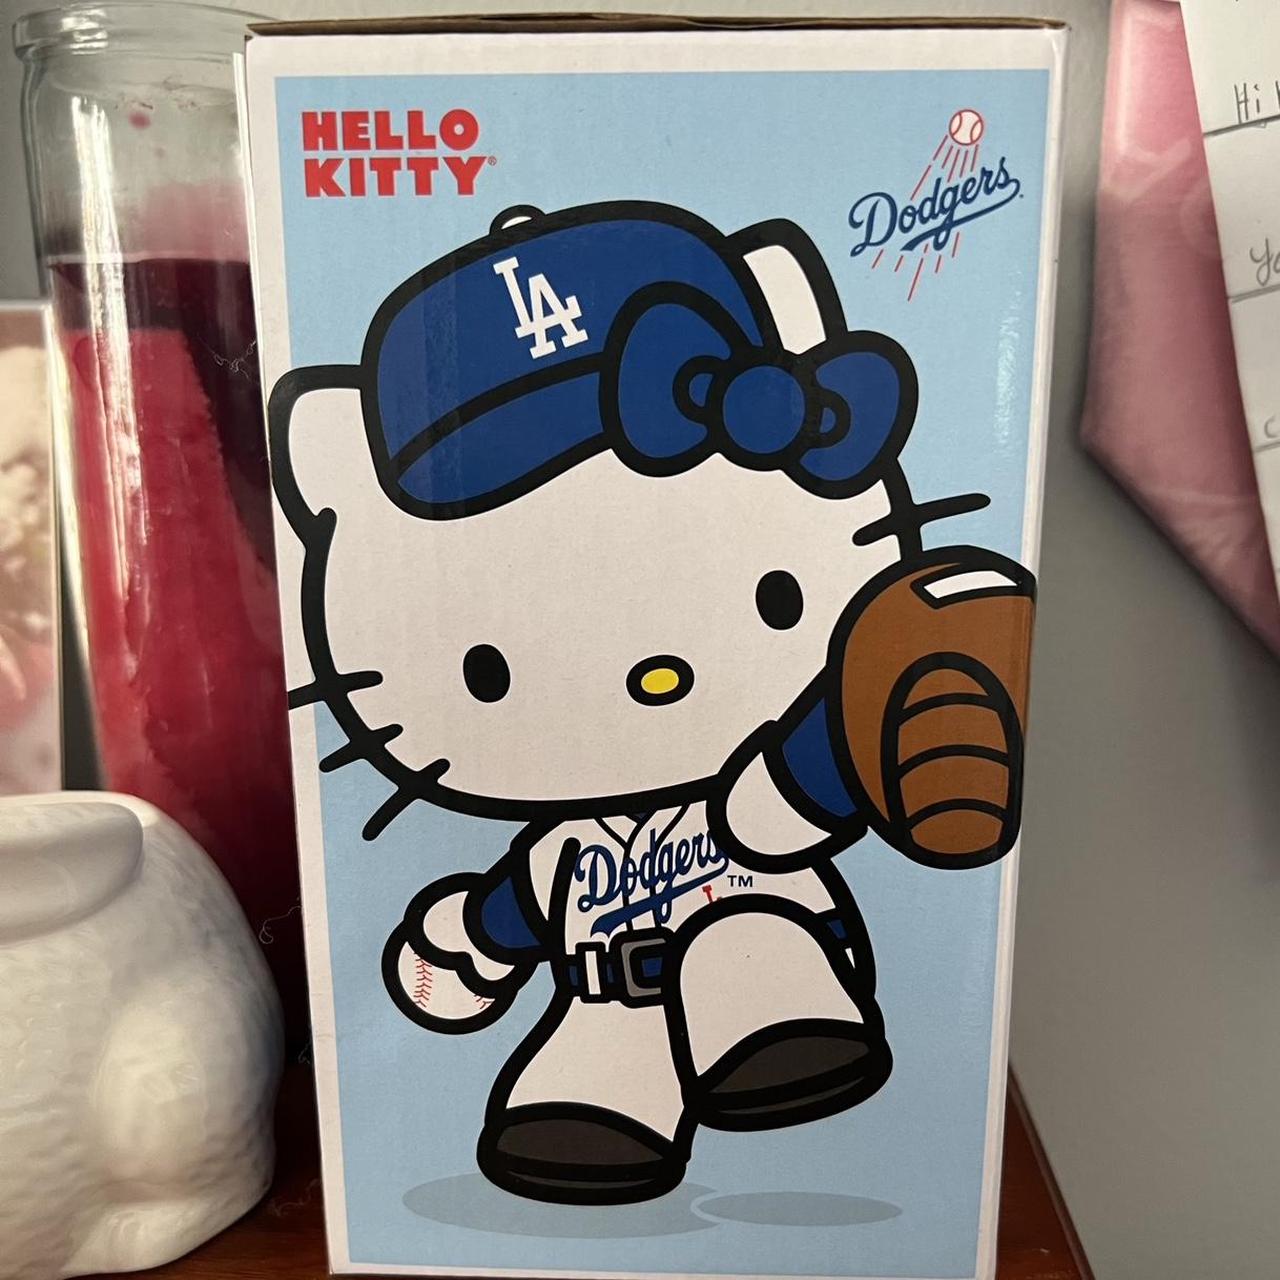 Hello Kitty LA Dodgers Decal Sticker Pink White Blue